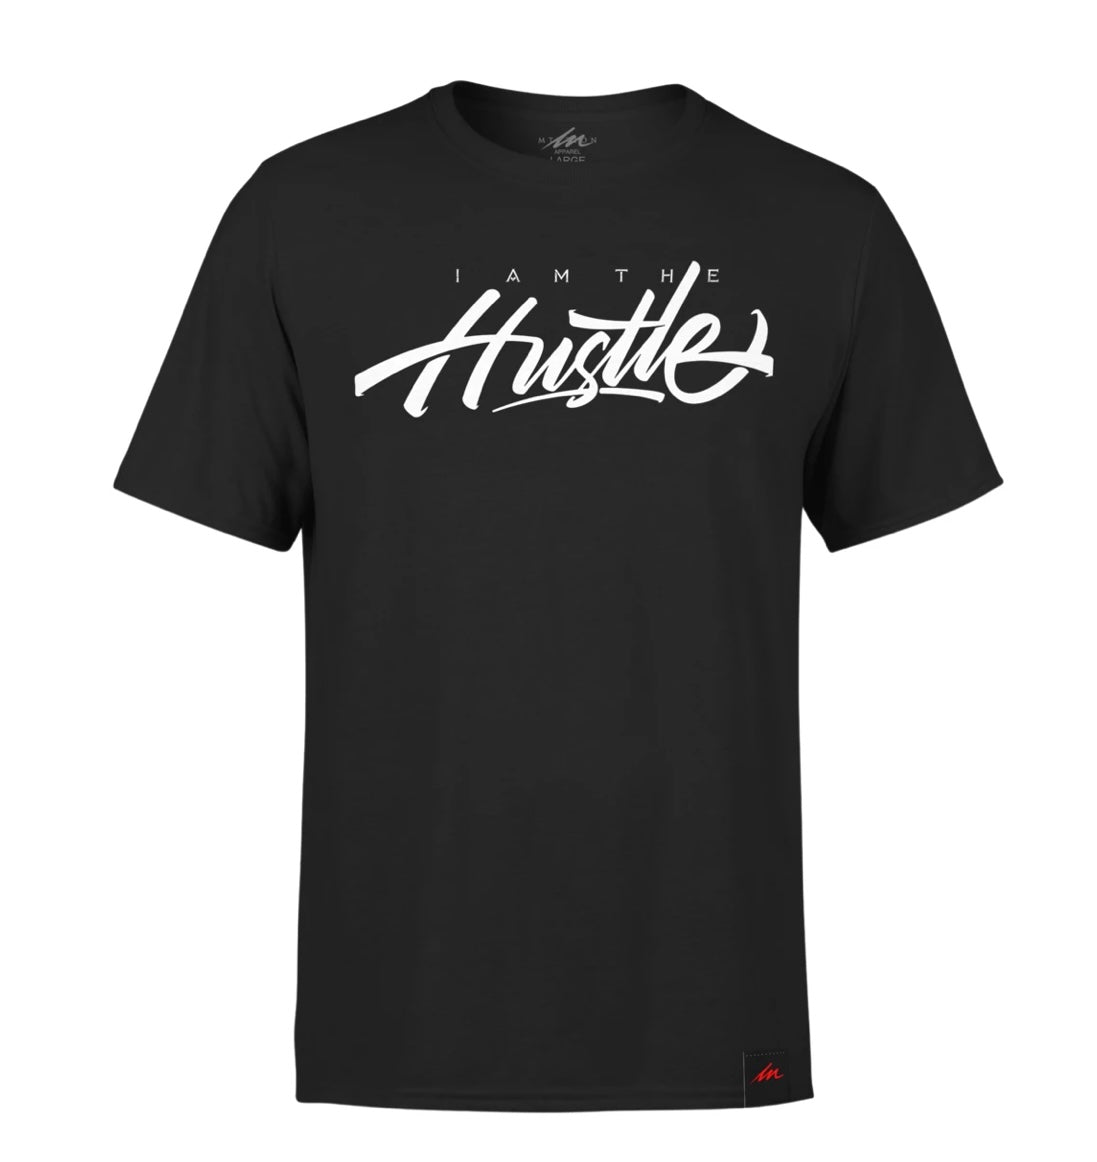 I Am The Hustle Graffito - Black Shirt